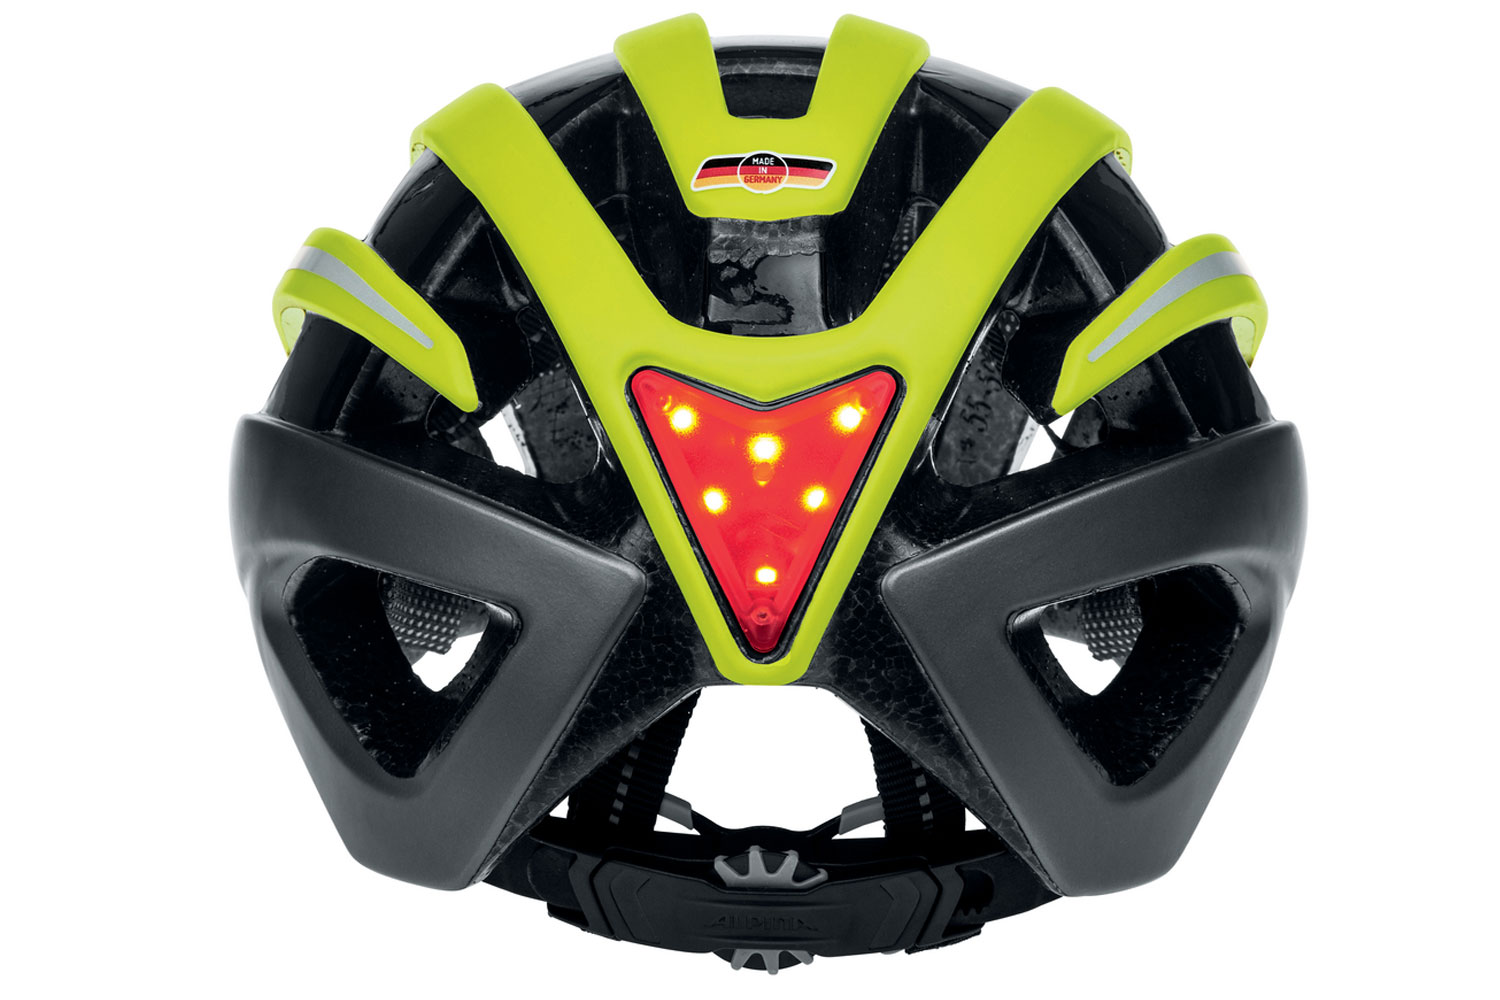 Alpina Campiglio Rennrad-Helm  